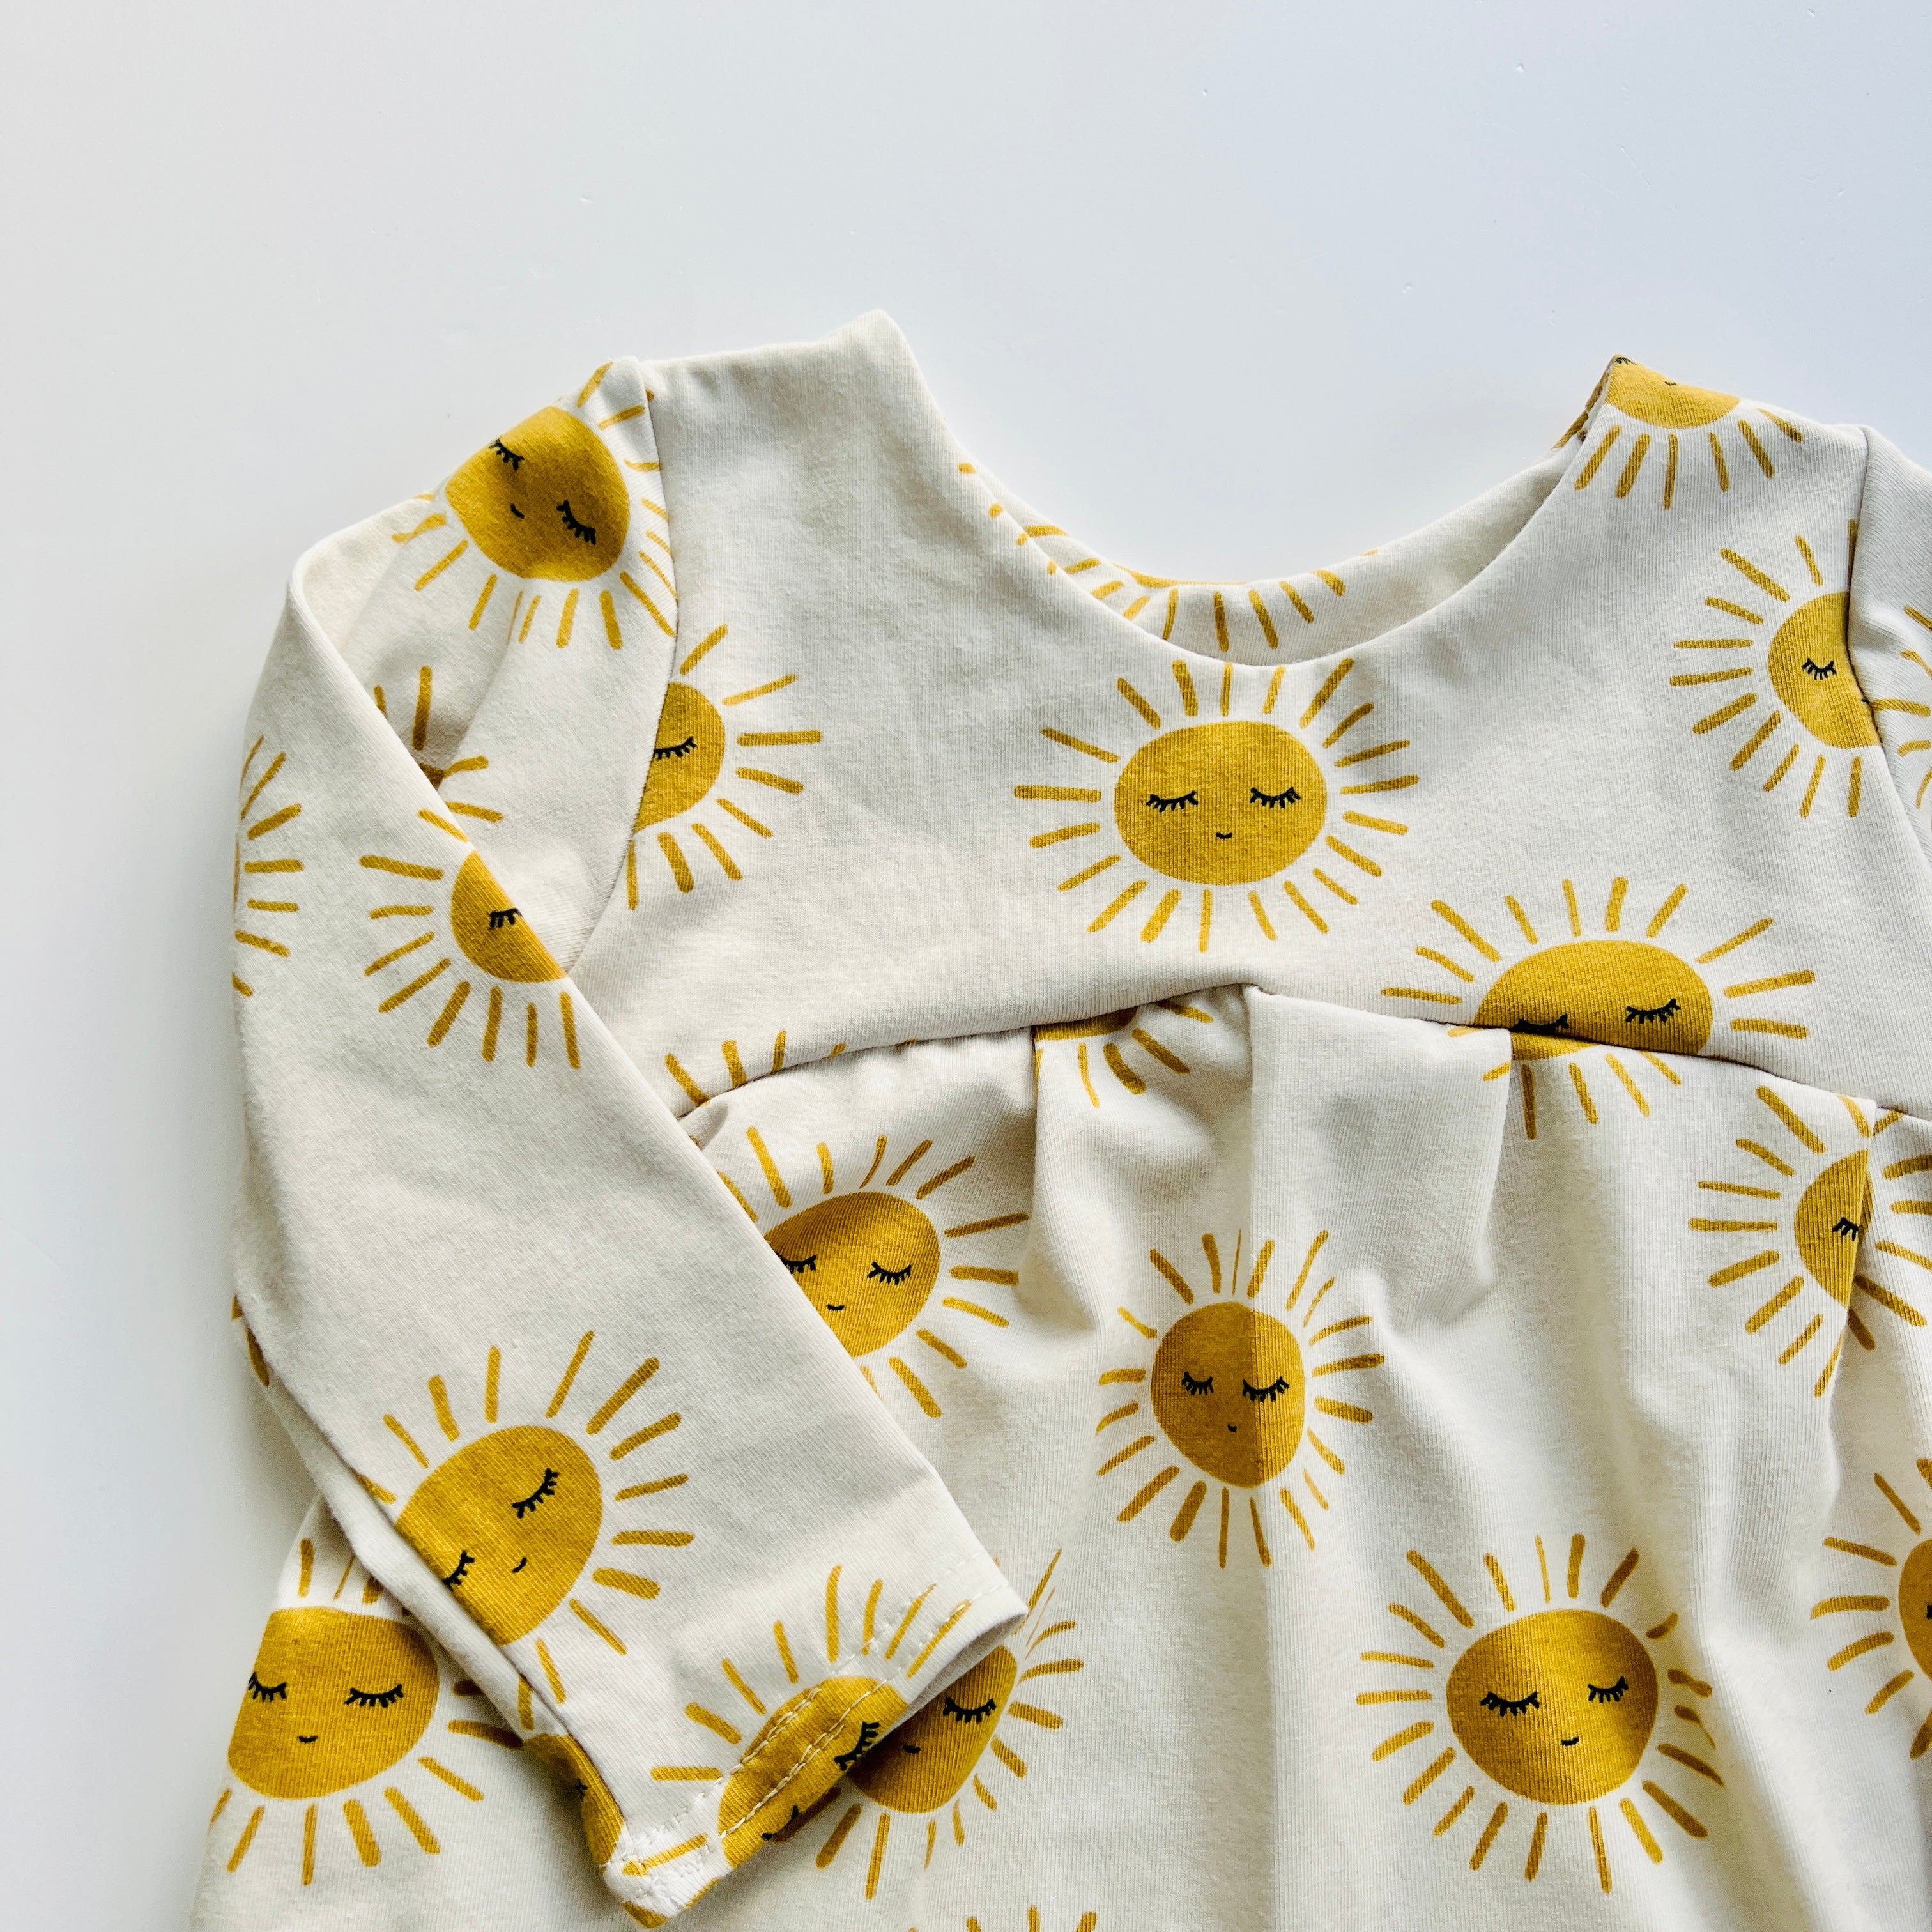 Eddie & Bee organic cotton long sleeved dress in Oat “Sunny” print